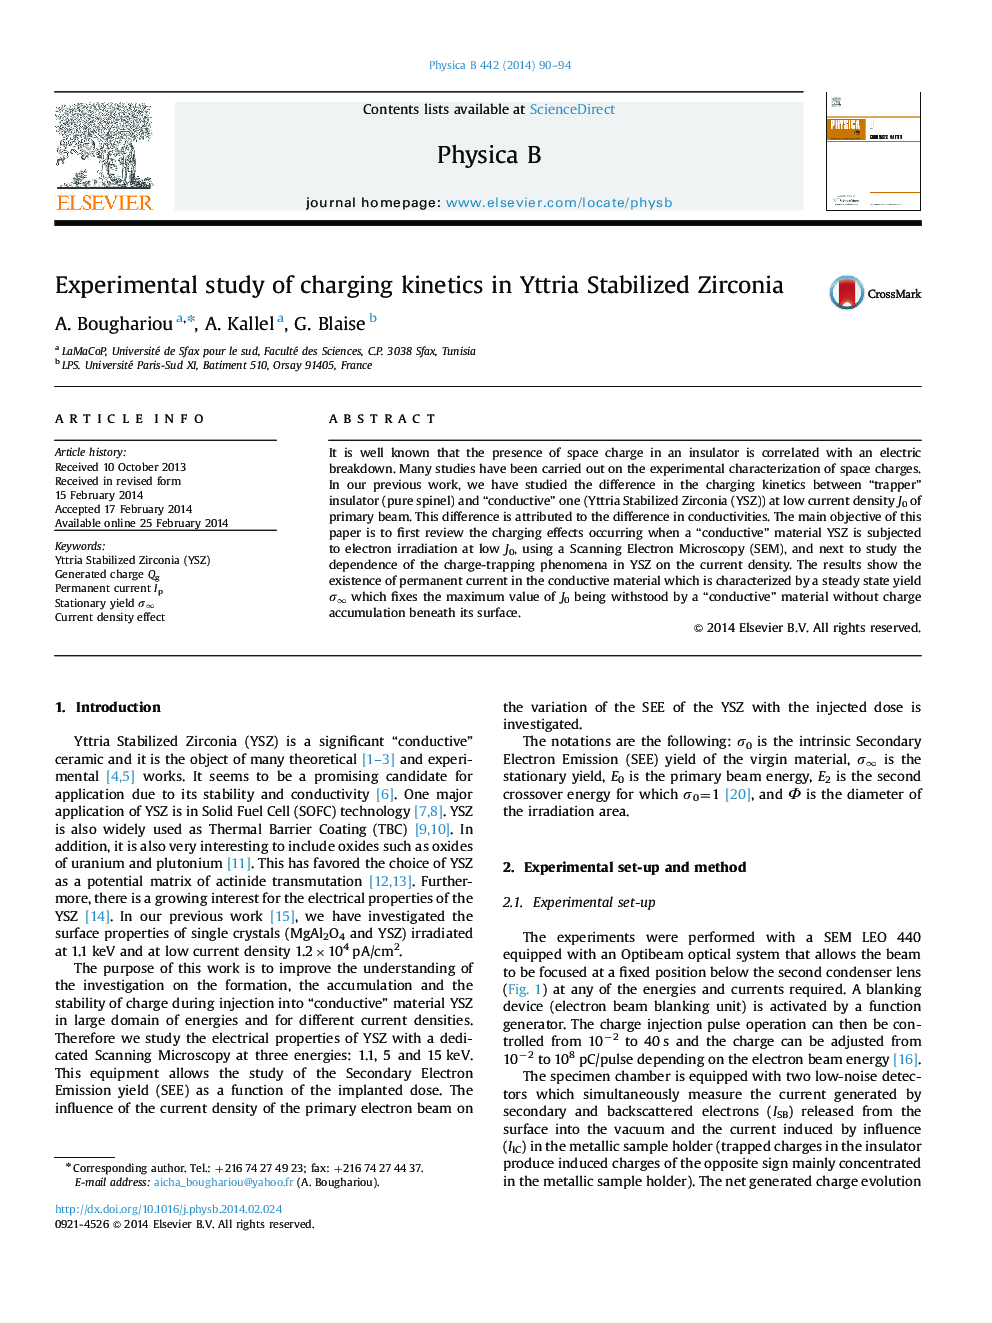 Experimental study of charging kinetics in Yttria Stabilized Zirconia